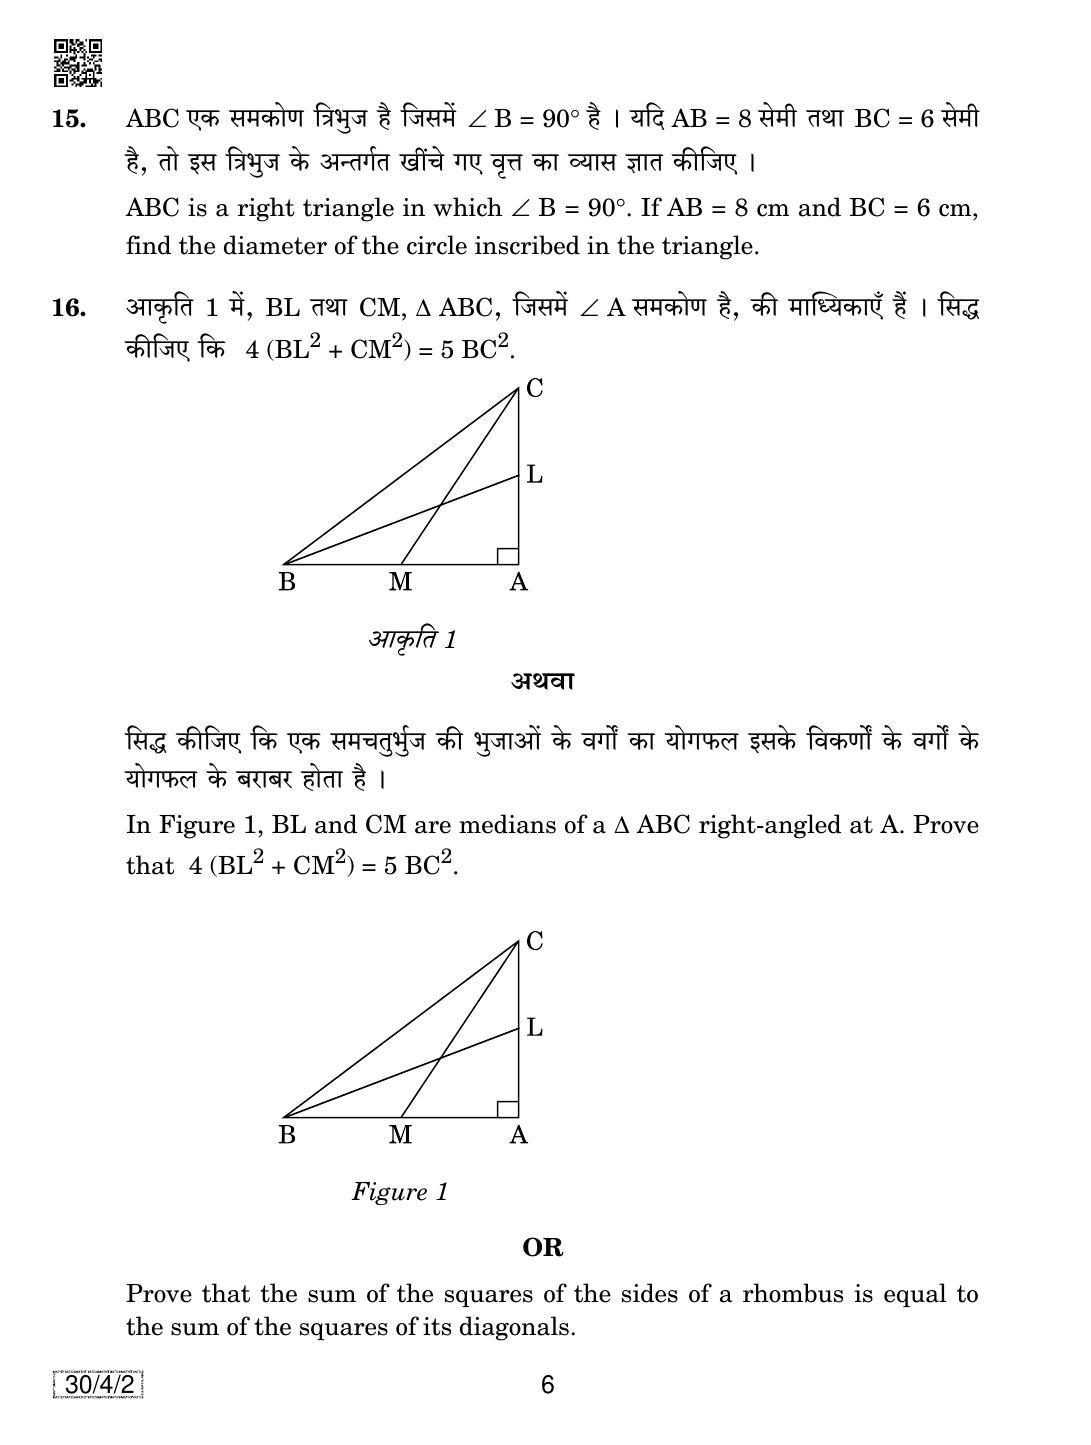 CBSE Class 10 Maths (30/4/2 - SET 2) 2019 Question Paper - Page 6